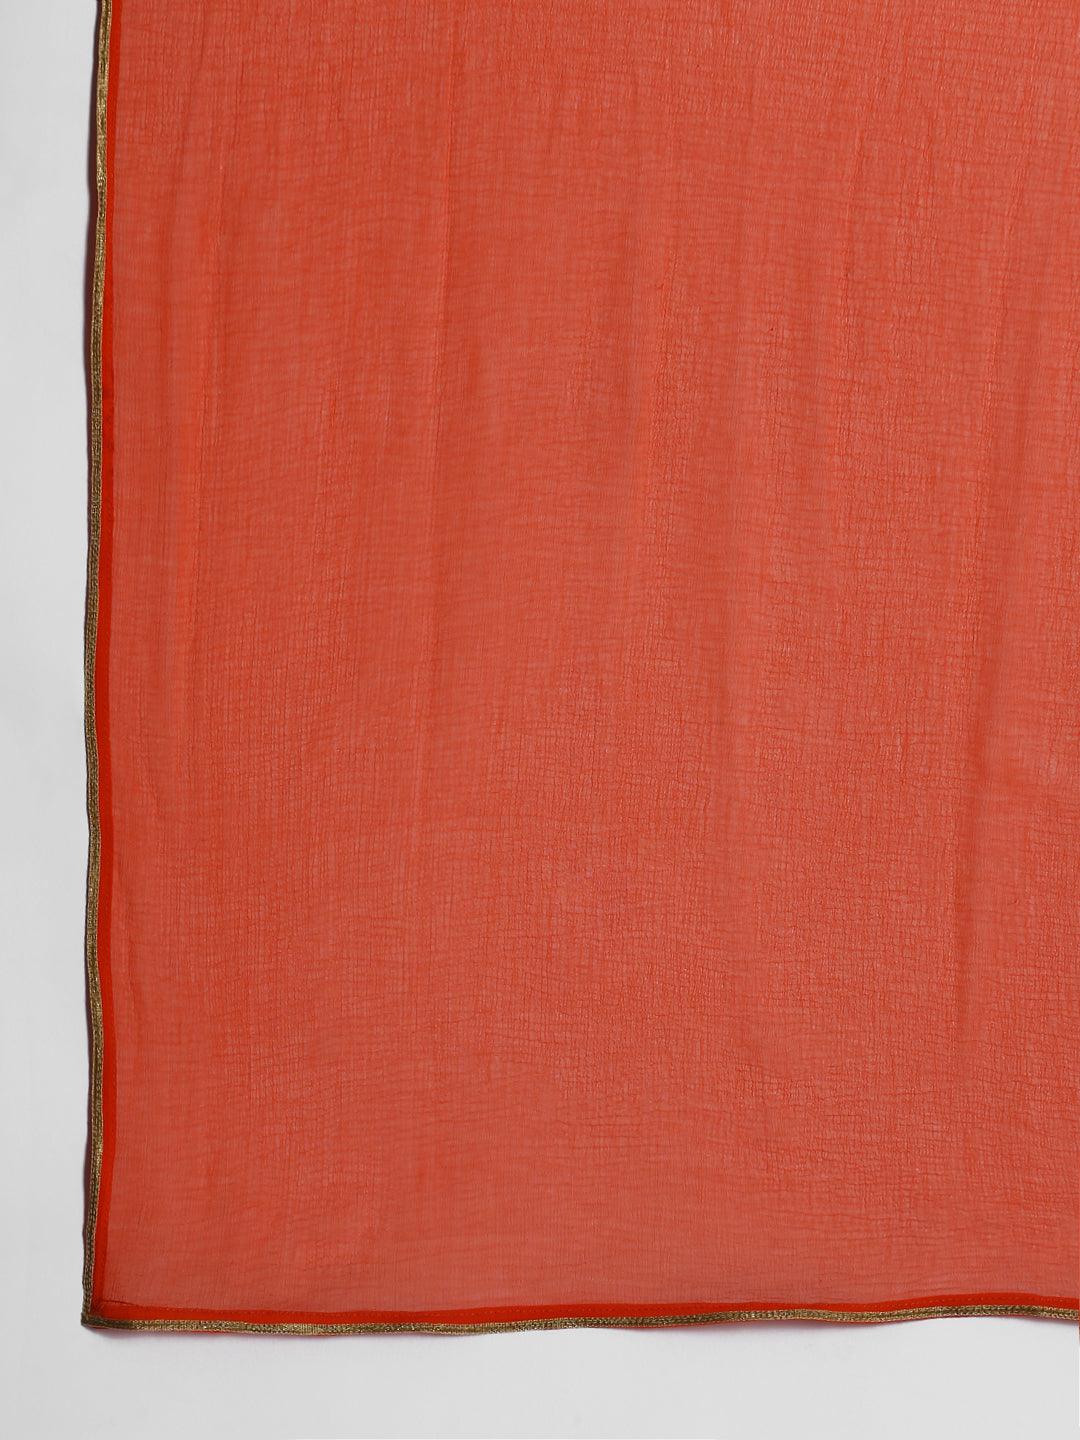 Orange Printed Rayon Straight Suit Set - Libas